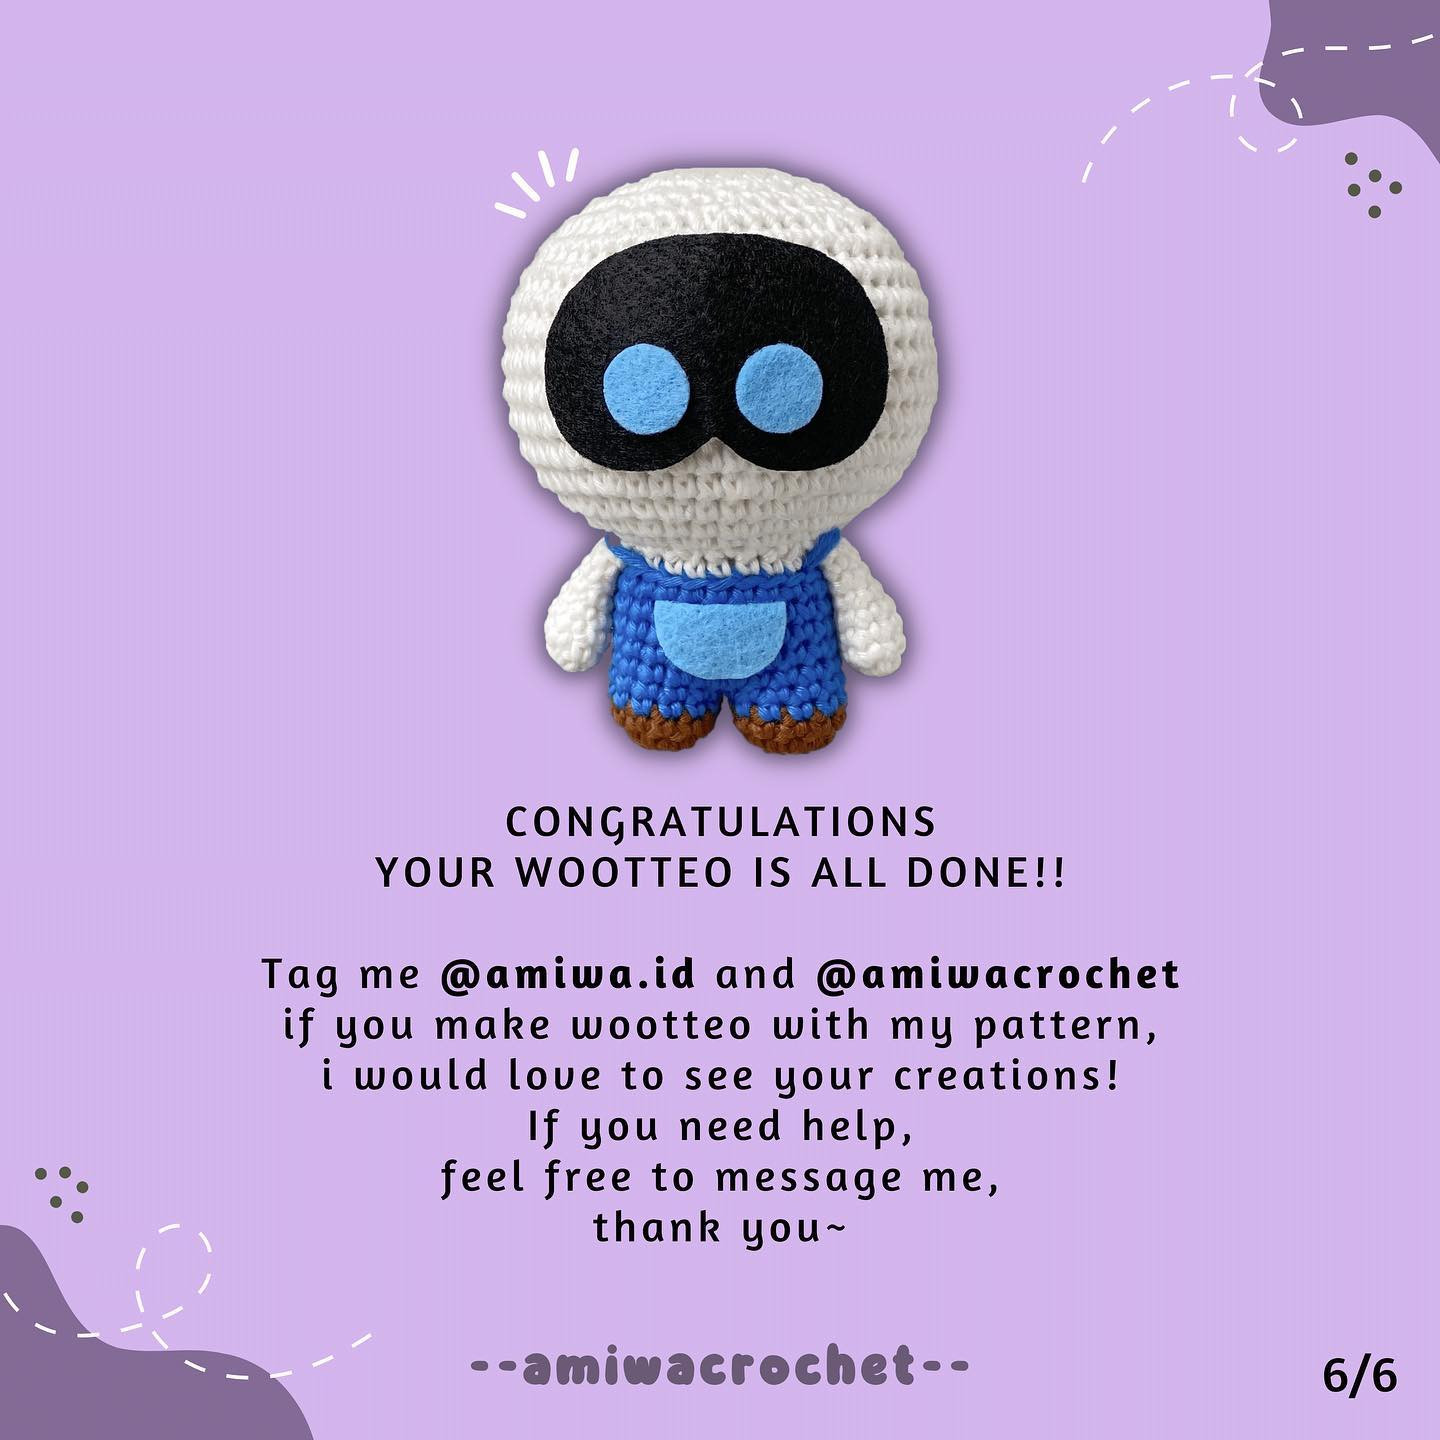 Blue-eyed robot crochet pattern, wearing blue overalls.